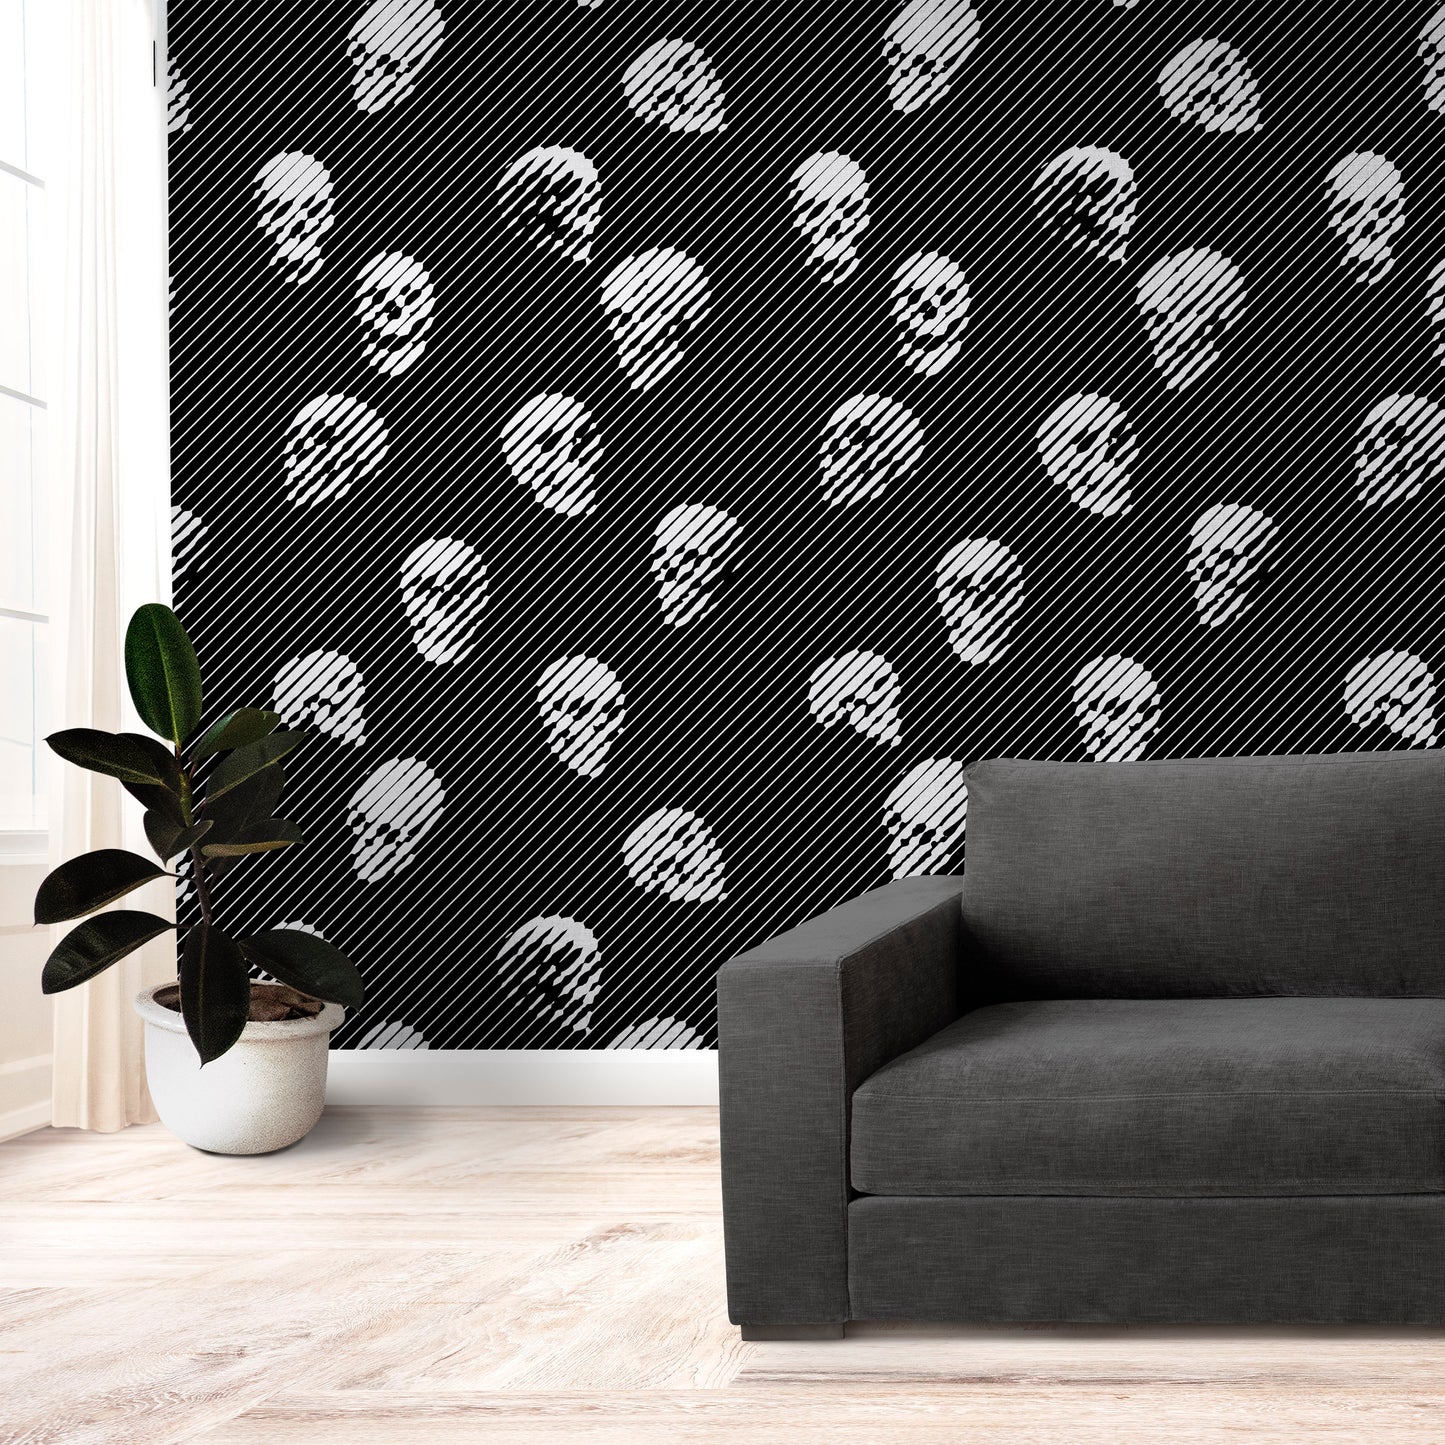 Gothic Skull Wallpaper Home Decor, Black And White Skull Art Print Traditional Wallpaper, Abstract Sugar Skull Modern Wallpaper Wall Decor